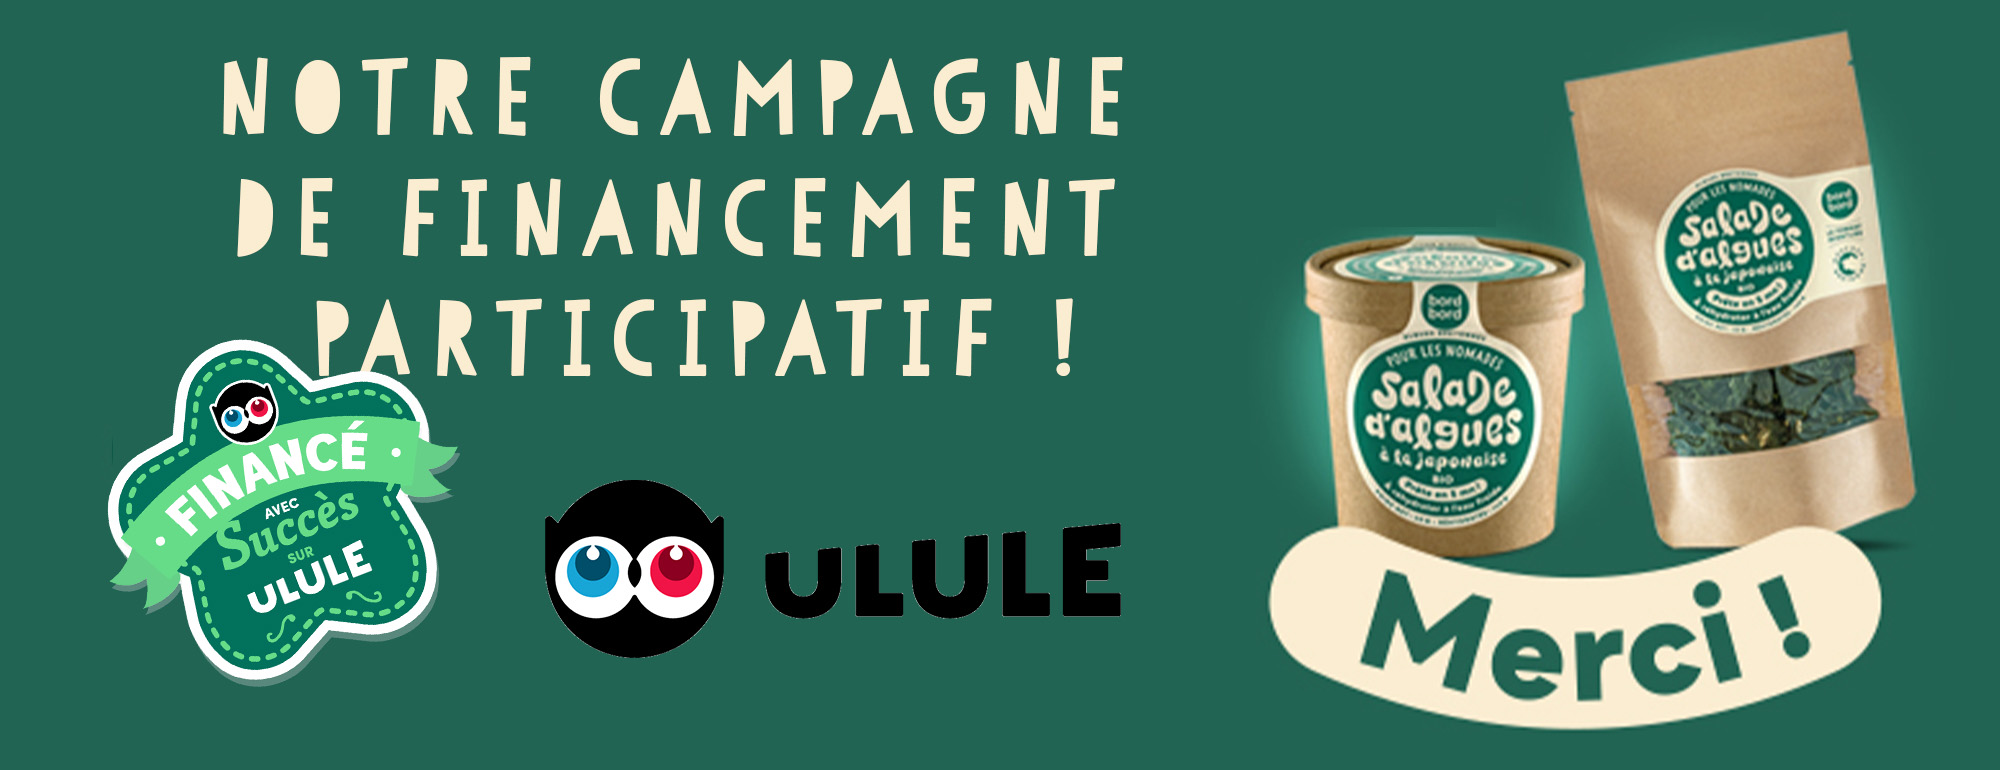 Campagne Ulule